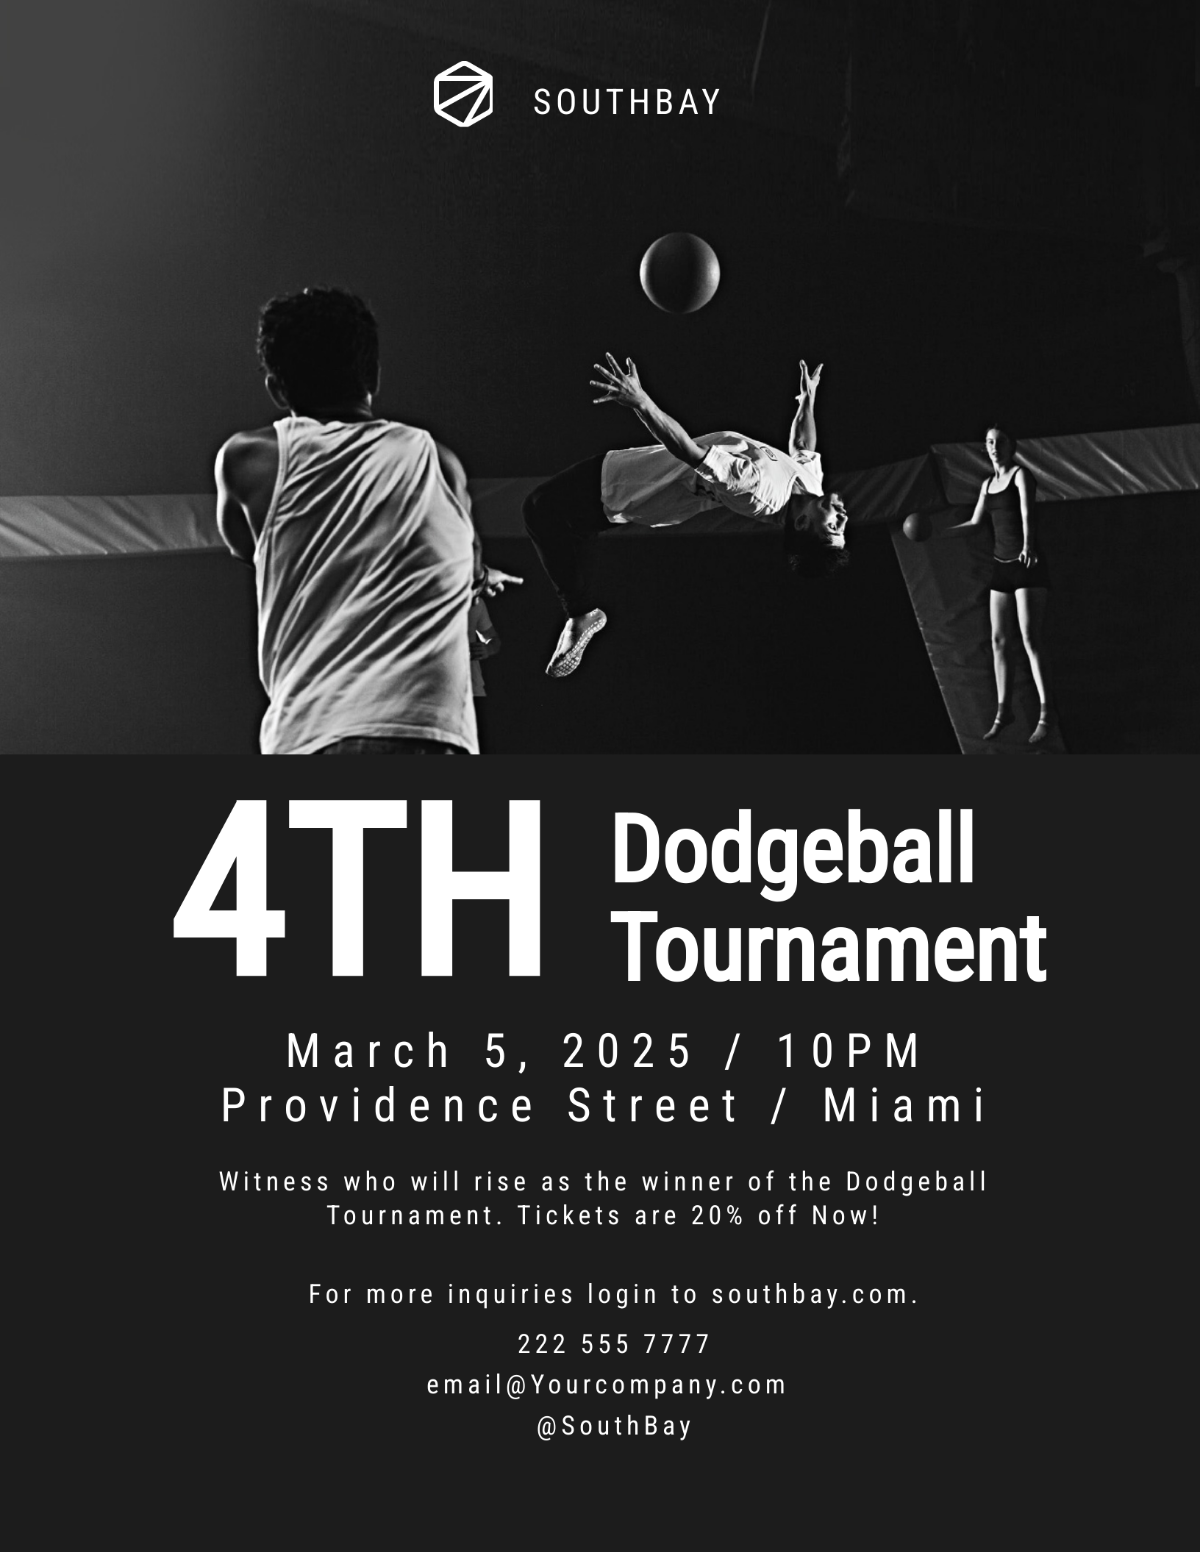 Dodgeball Tournament Flyer